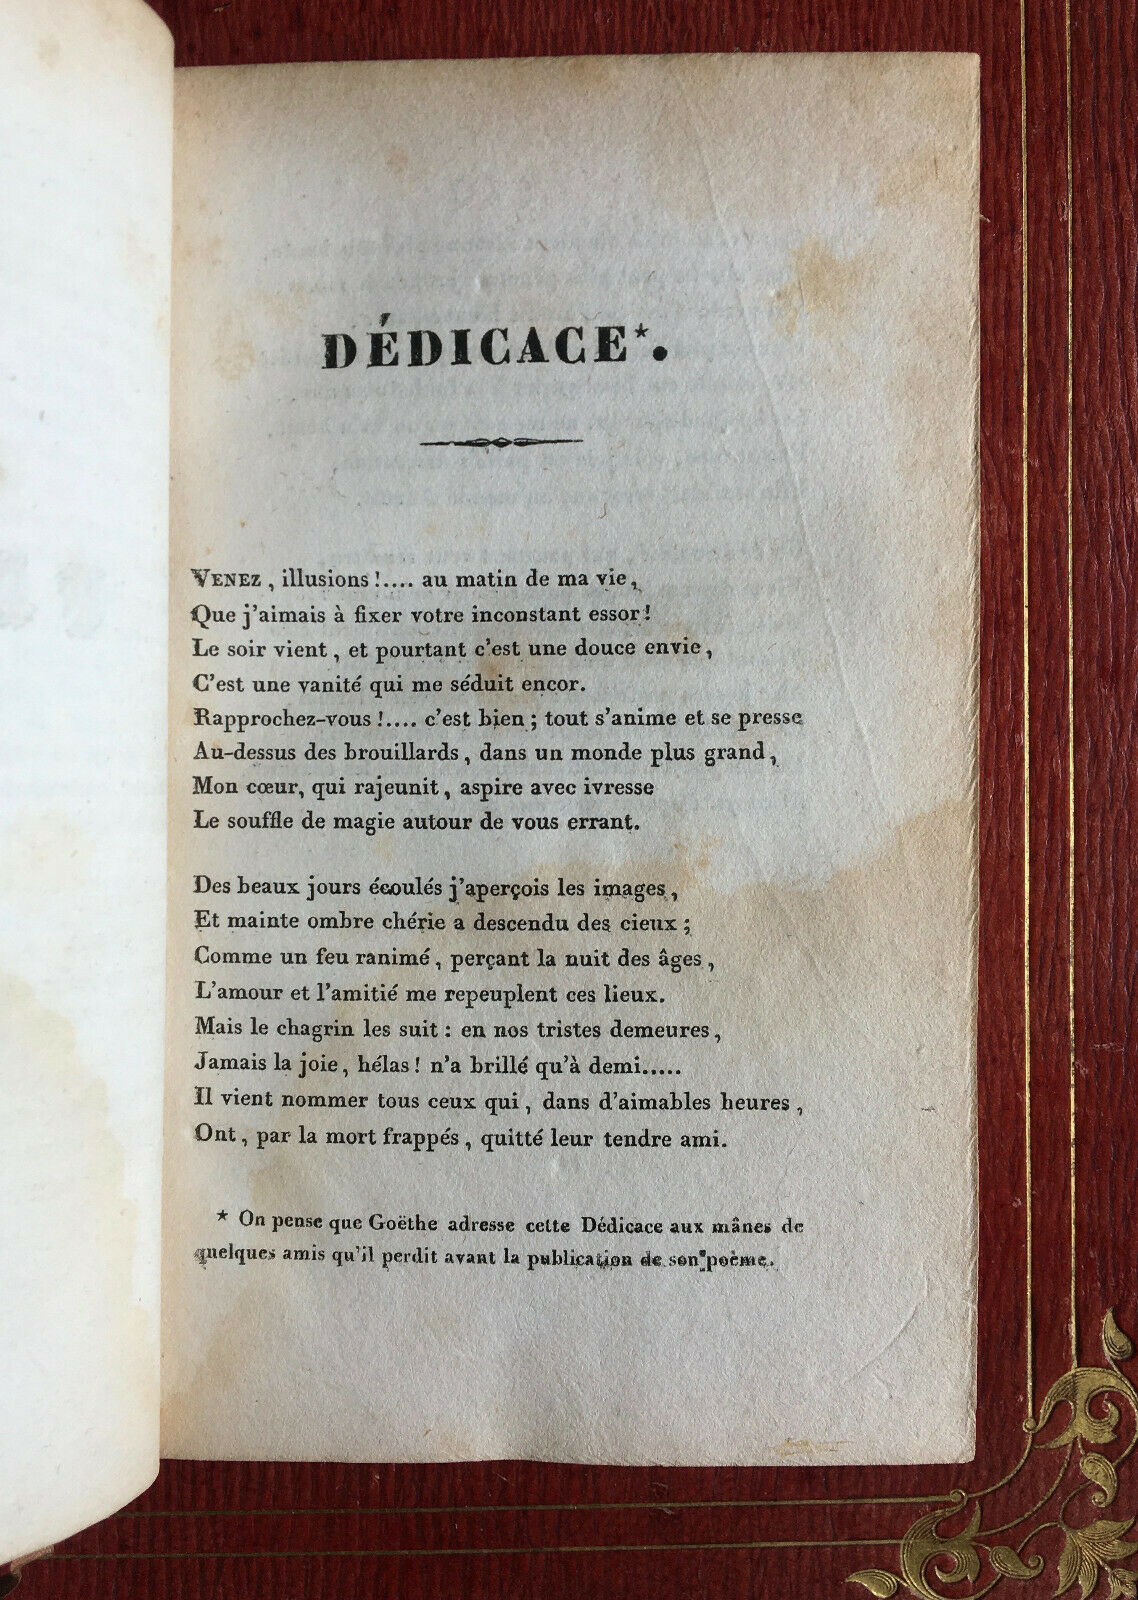 Goethe, Gérard de Nerval — Faust — 1st ed. from the translation — Dondey-Dupre — 1828.